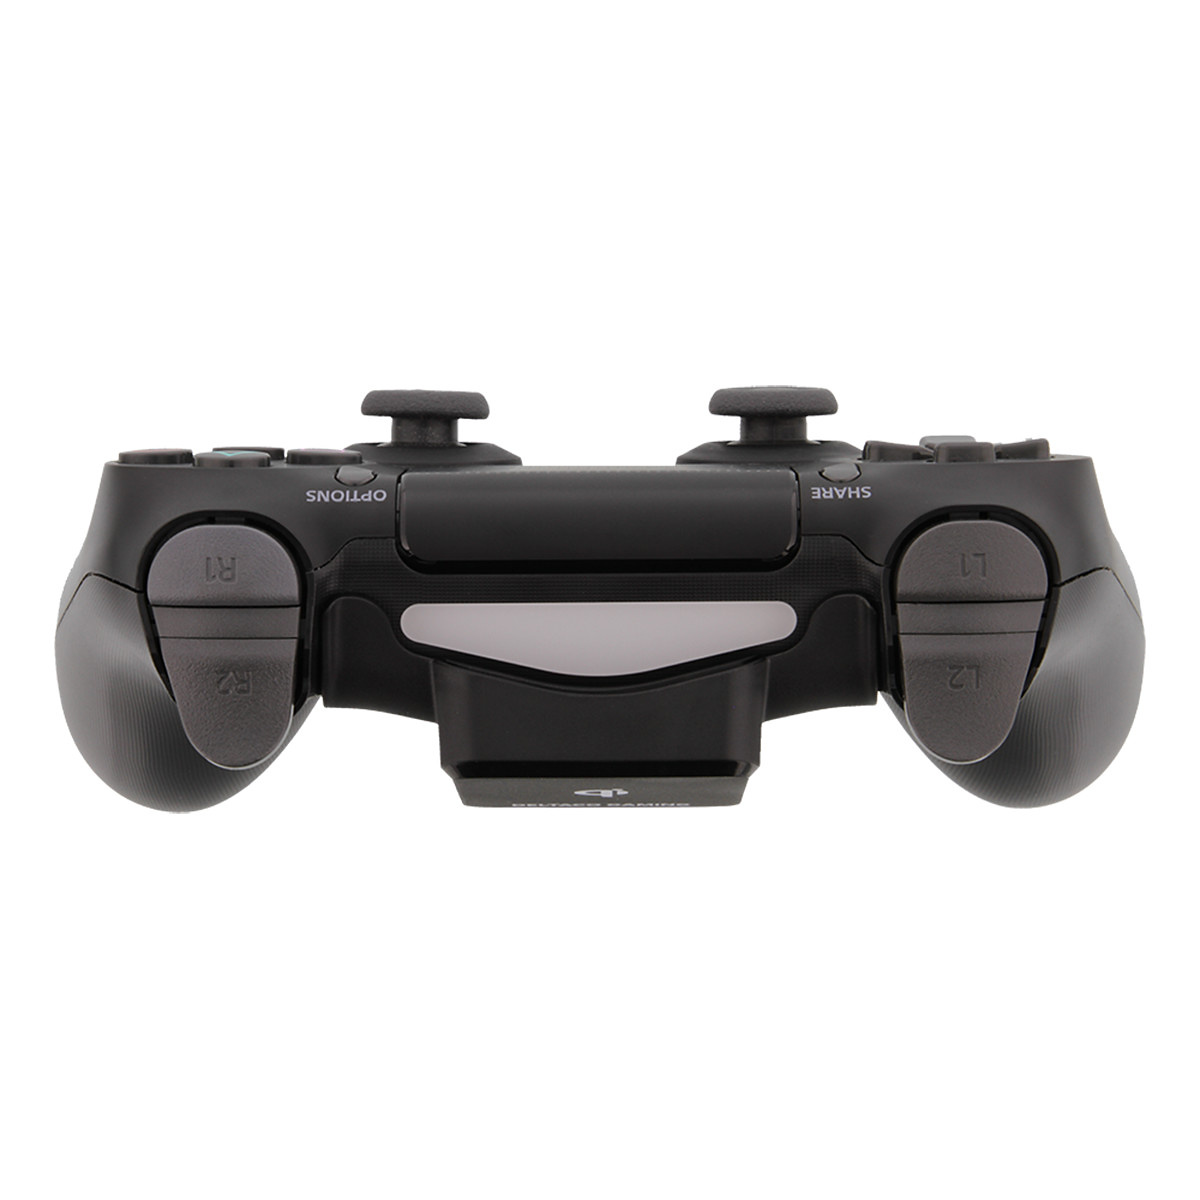 DELTACO GAMING trådlös Qi-receiver till PS4 handkontrollers, svart